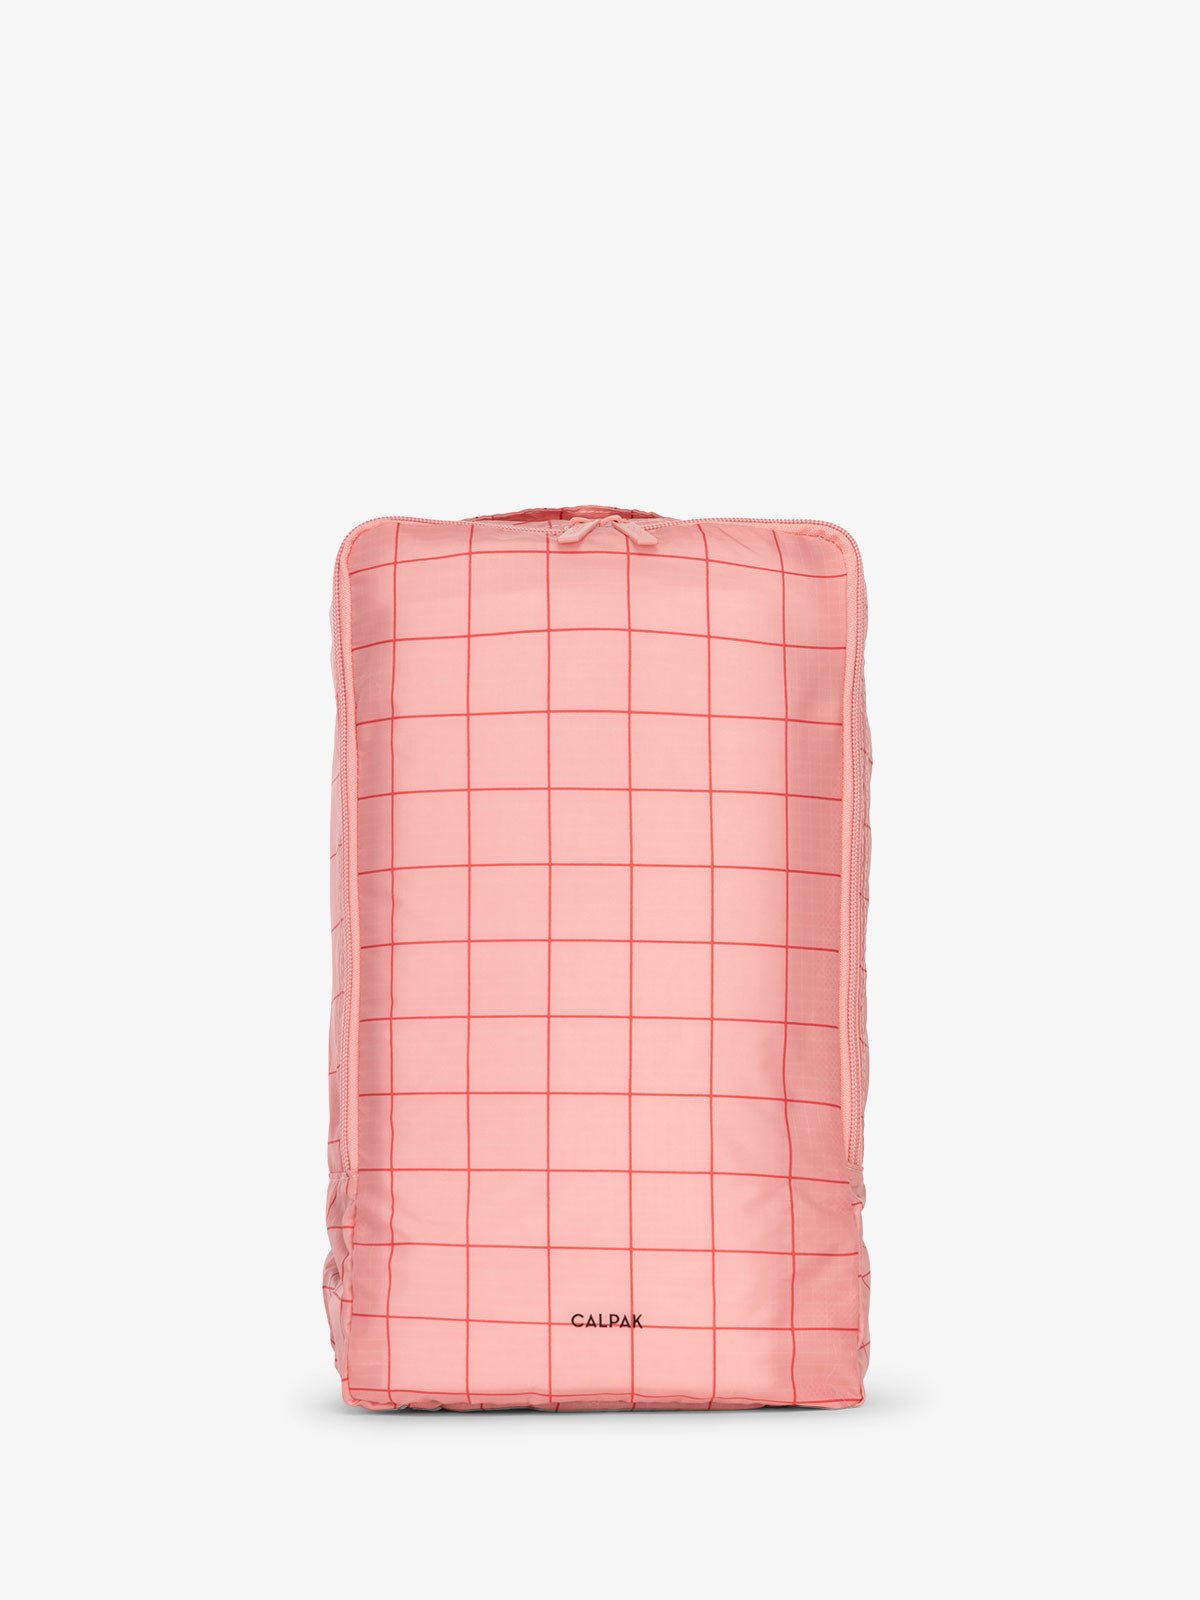 CALPAK Compakt shoe storage travel bag with handle in pink grid